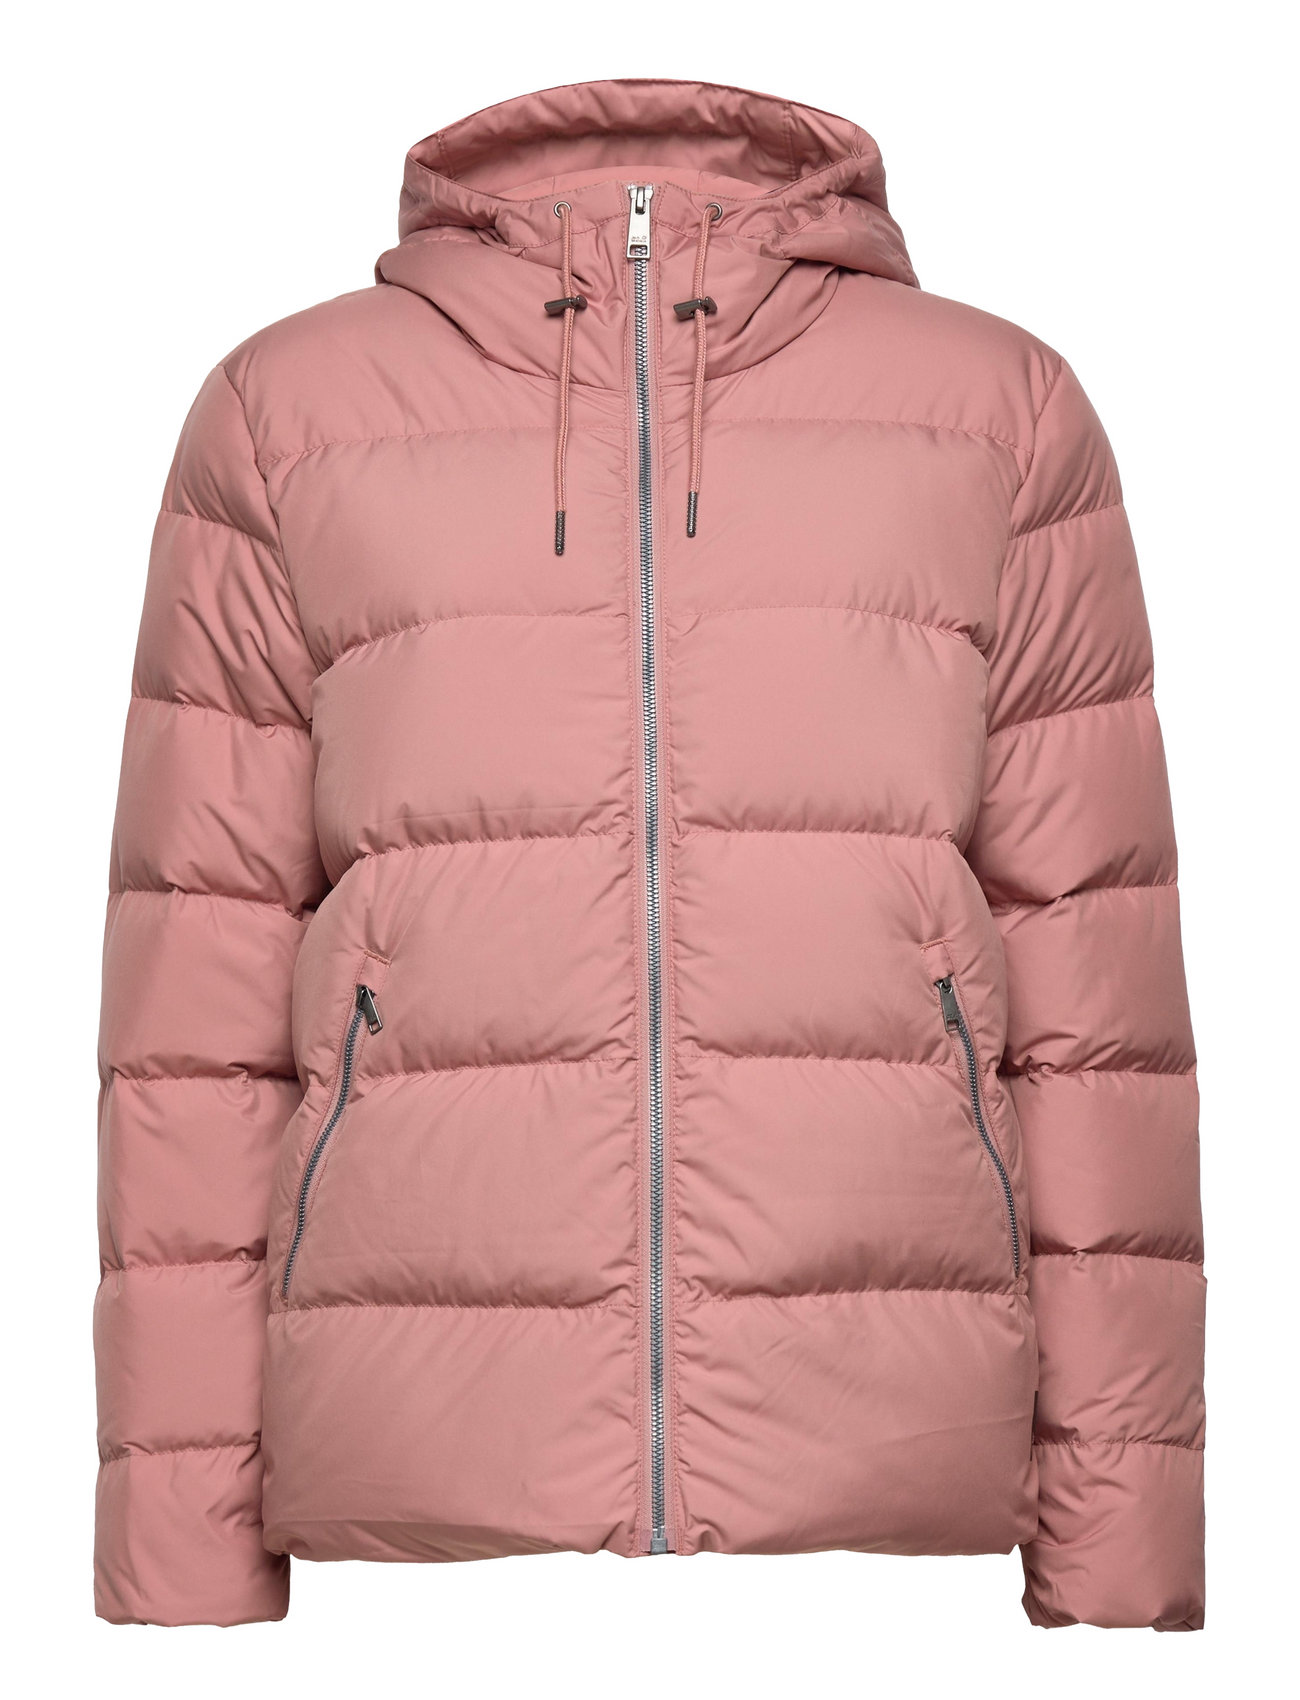 Jack Wolfskin Frozen Palace Jacket W – jackets & coats – shop at Booztlet